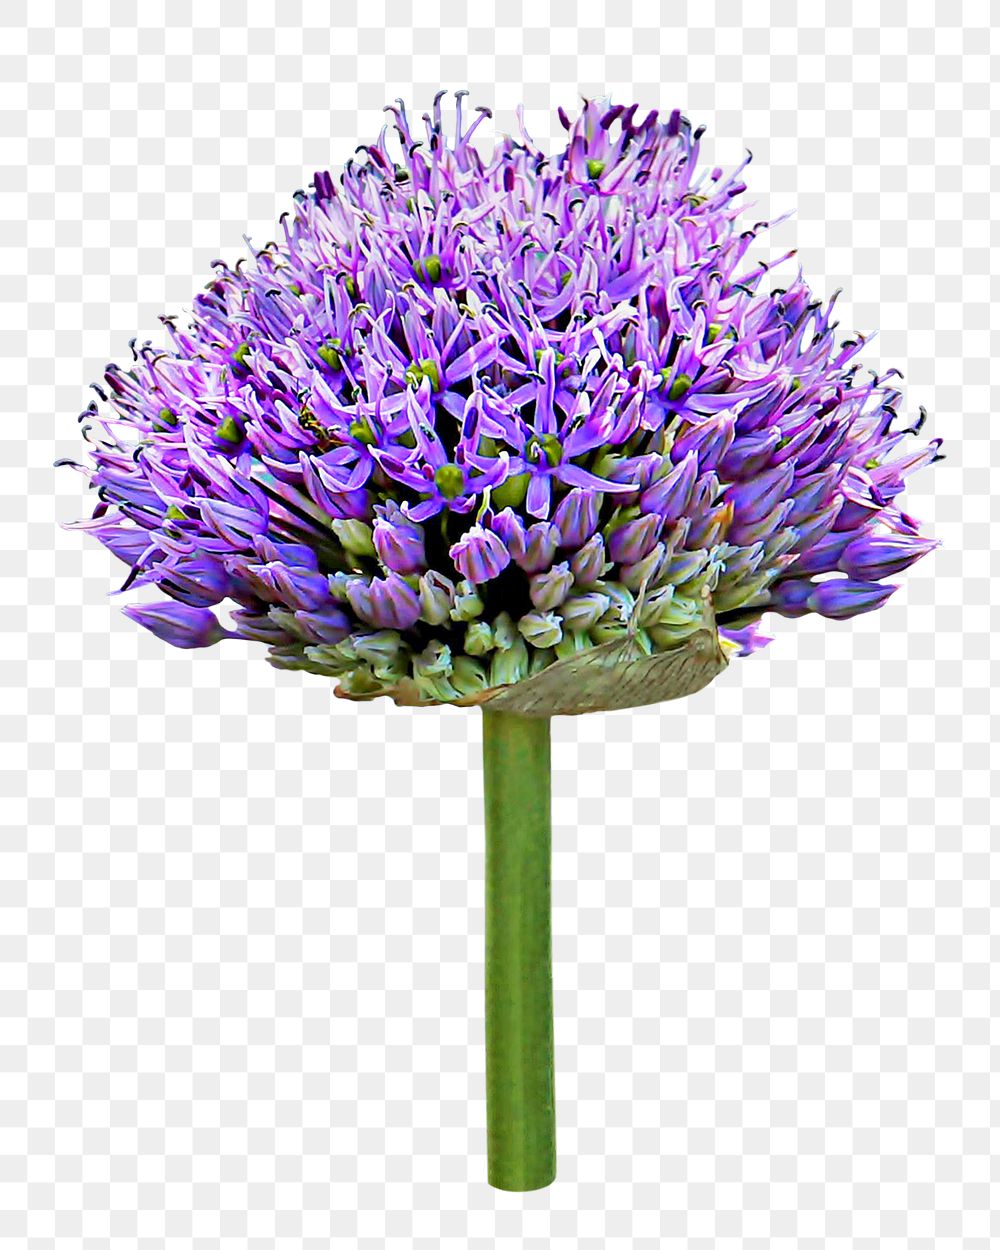 Purple allium flower png, transparent background